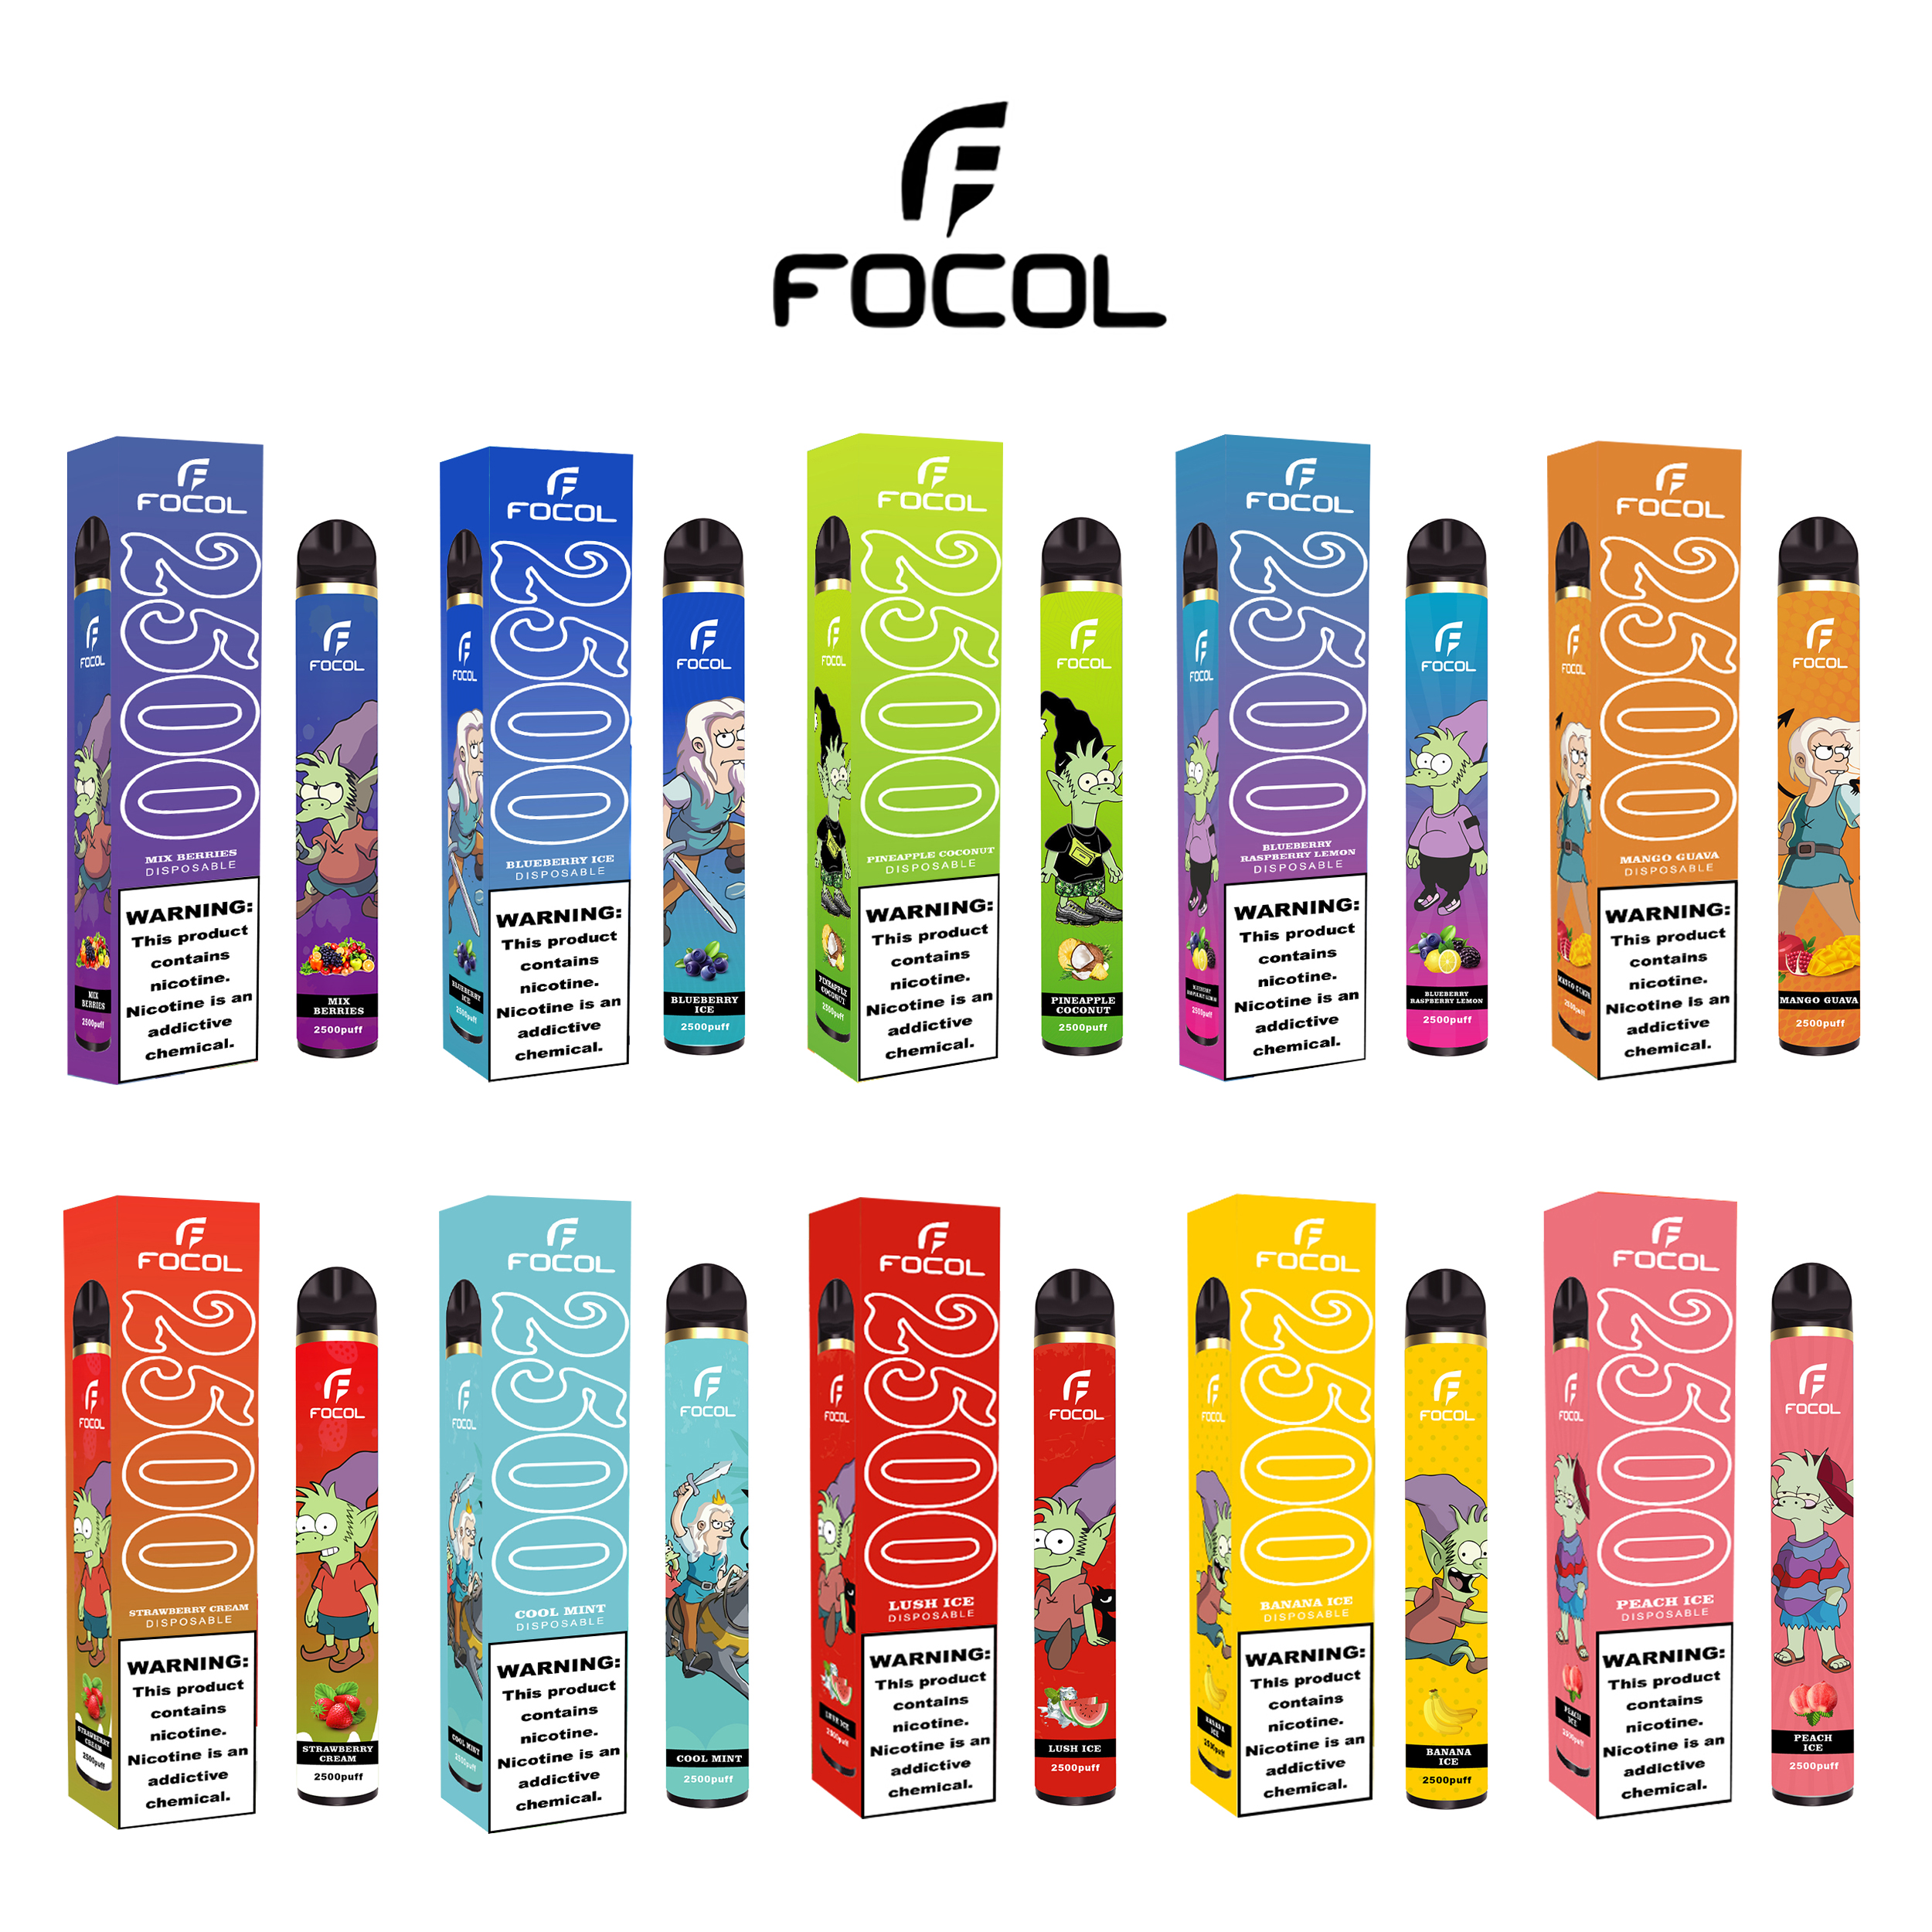 FOCOL STICK Cheap 5% Nicotine Vape 2500 Puffs 